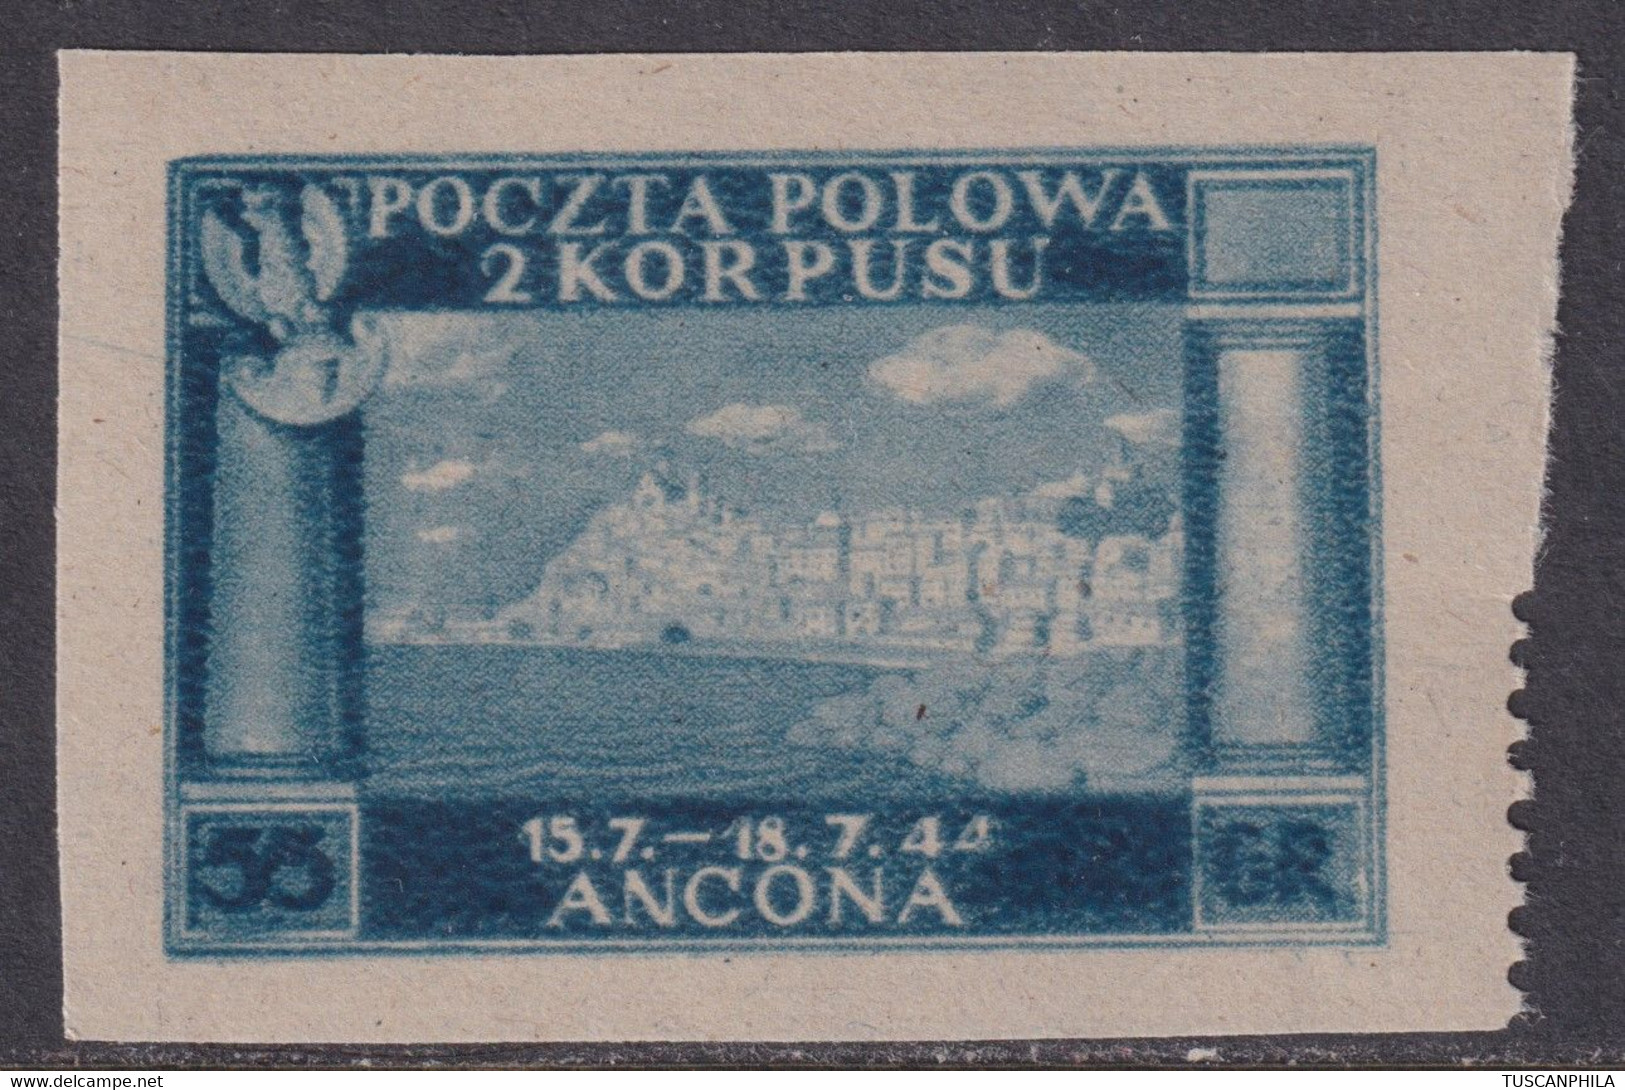 Corpo Polacco Vittorie Polacche 1946 55 G. Grigio Sass. 2bf MNH** Cv. 350 - 1946-47 Corpo Polacco Period